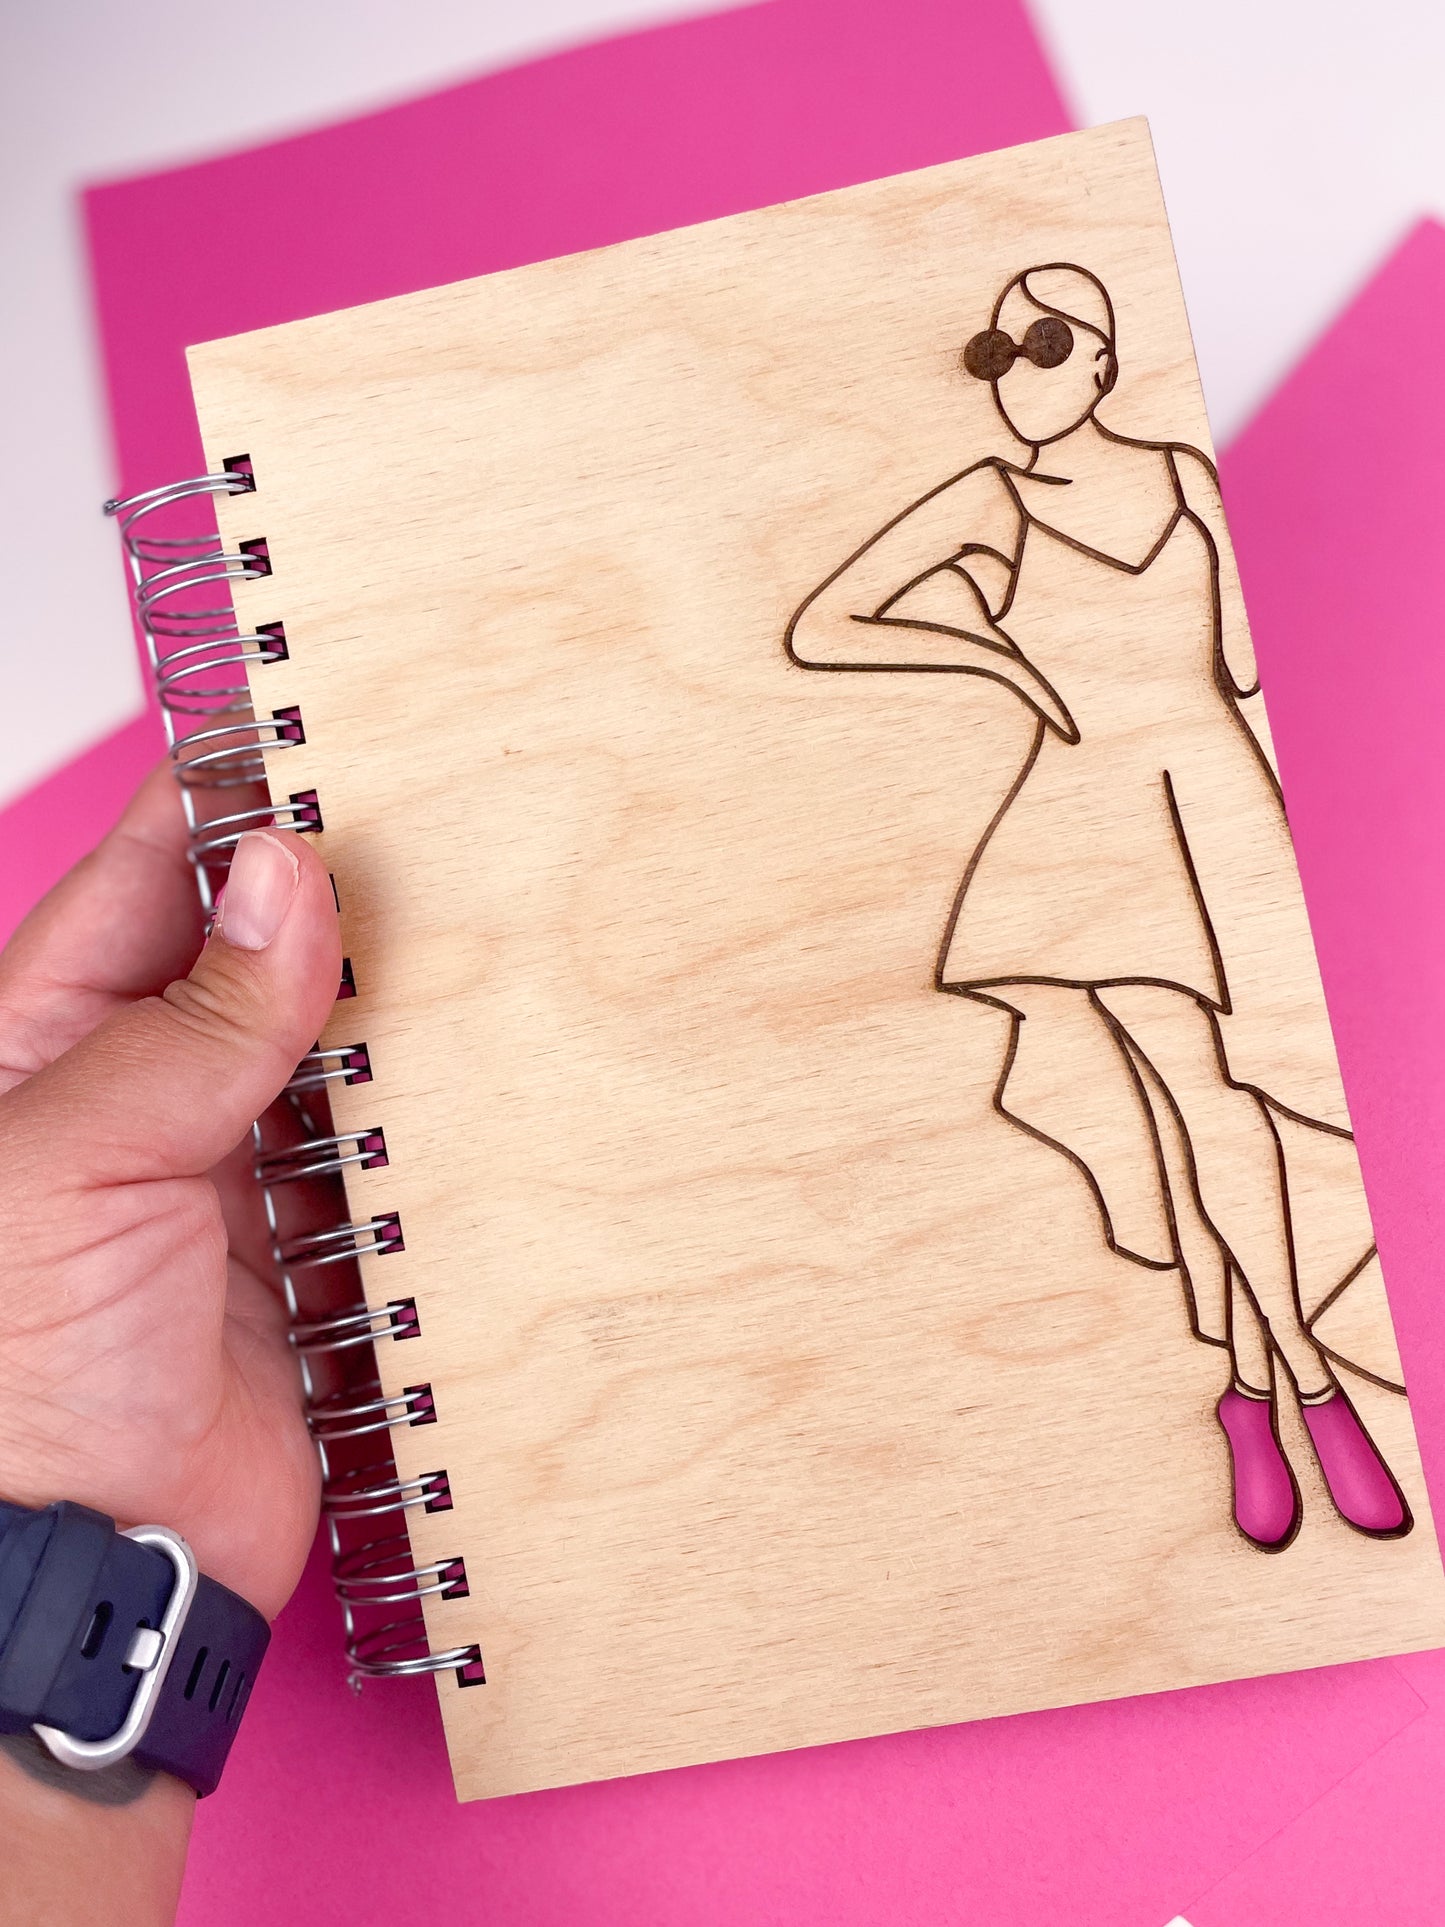 Glamorous woman wearing pink heels wooden journal